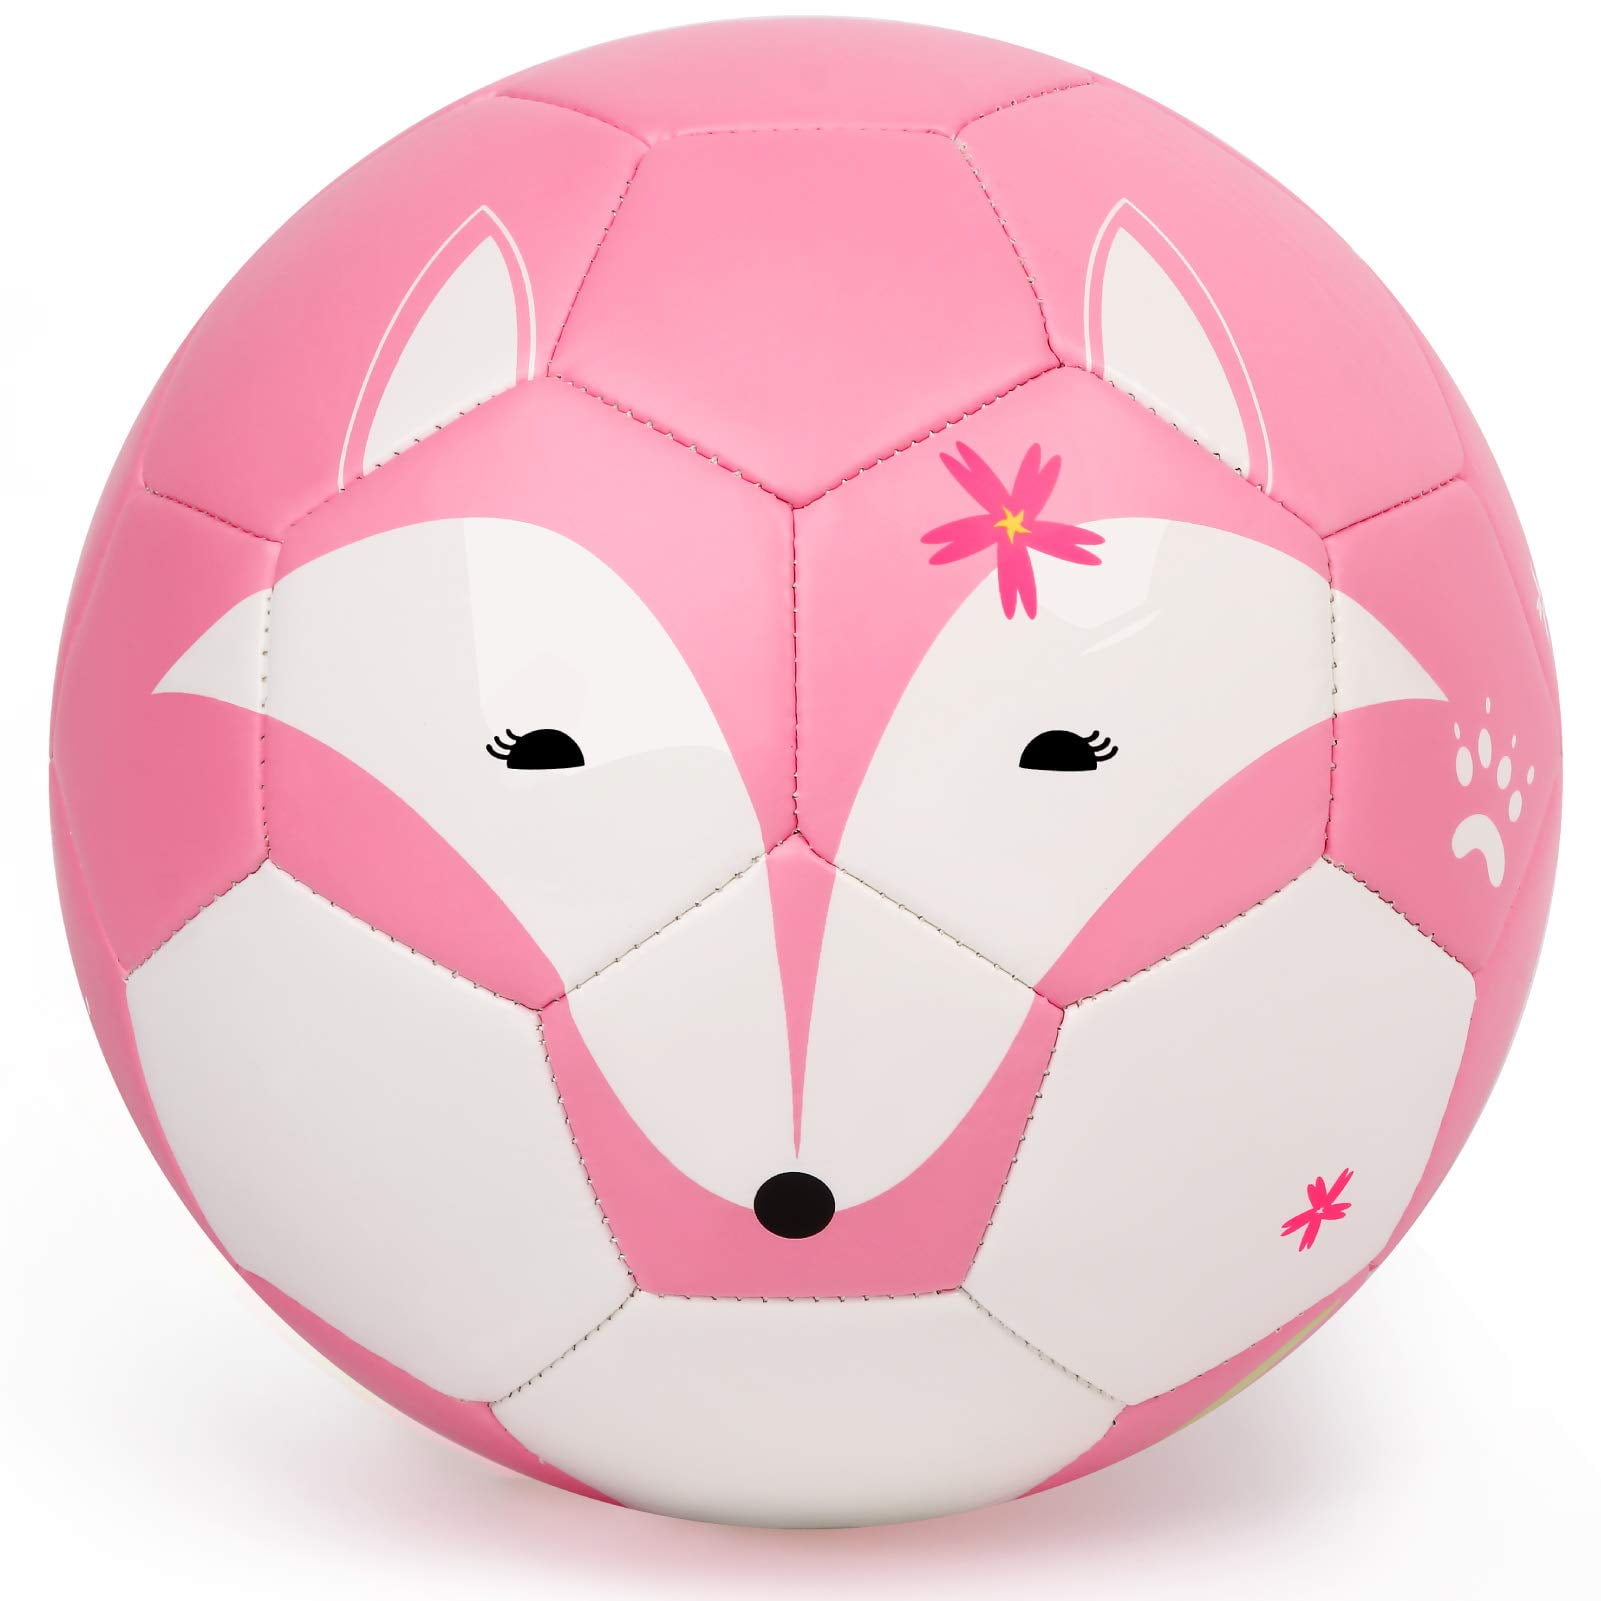 Merkapa Kids Soccer Ball Size 3, Cartoon Soccer Balls Toys for Girls Boys  Toddler Child Gift Outdoor Home Sport with Pump